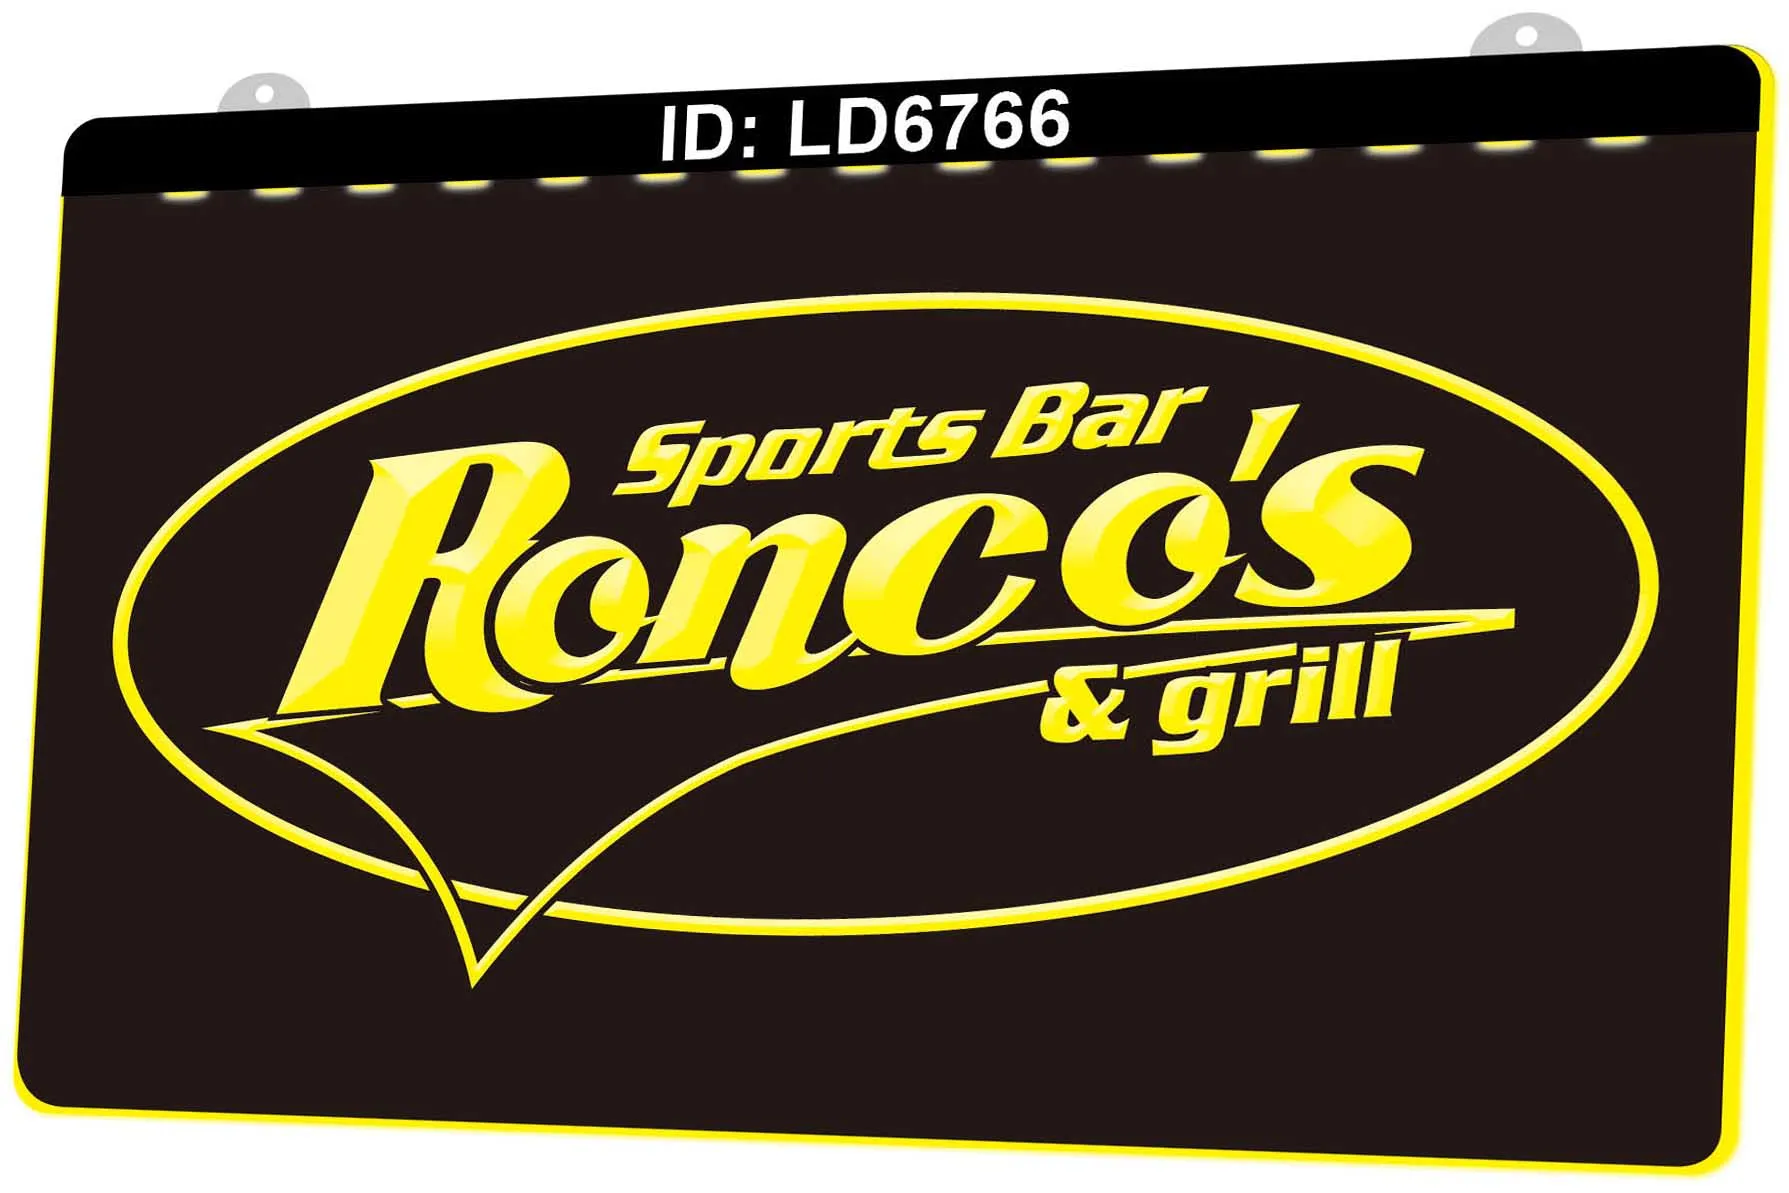 LD6766 Sports Bar Grill Ronco's 3D Grabado LED Light Sign Venta al por mayor al por menor